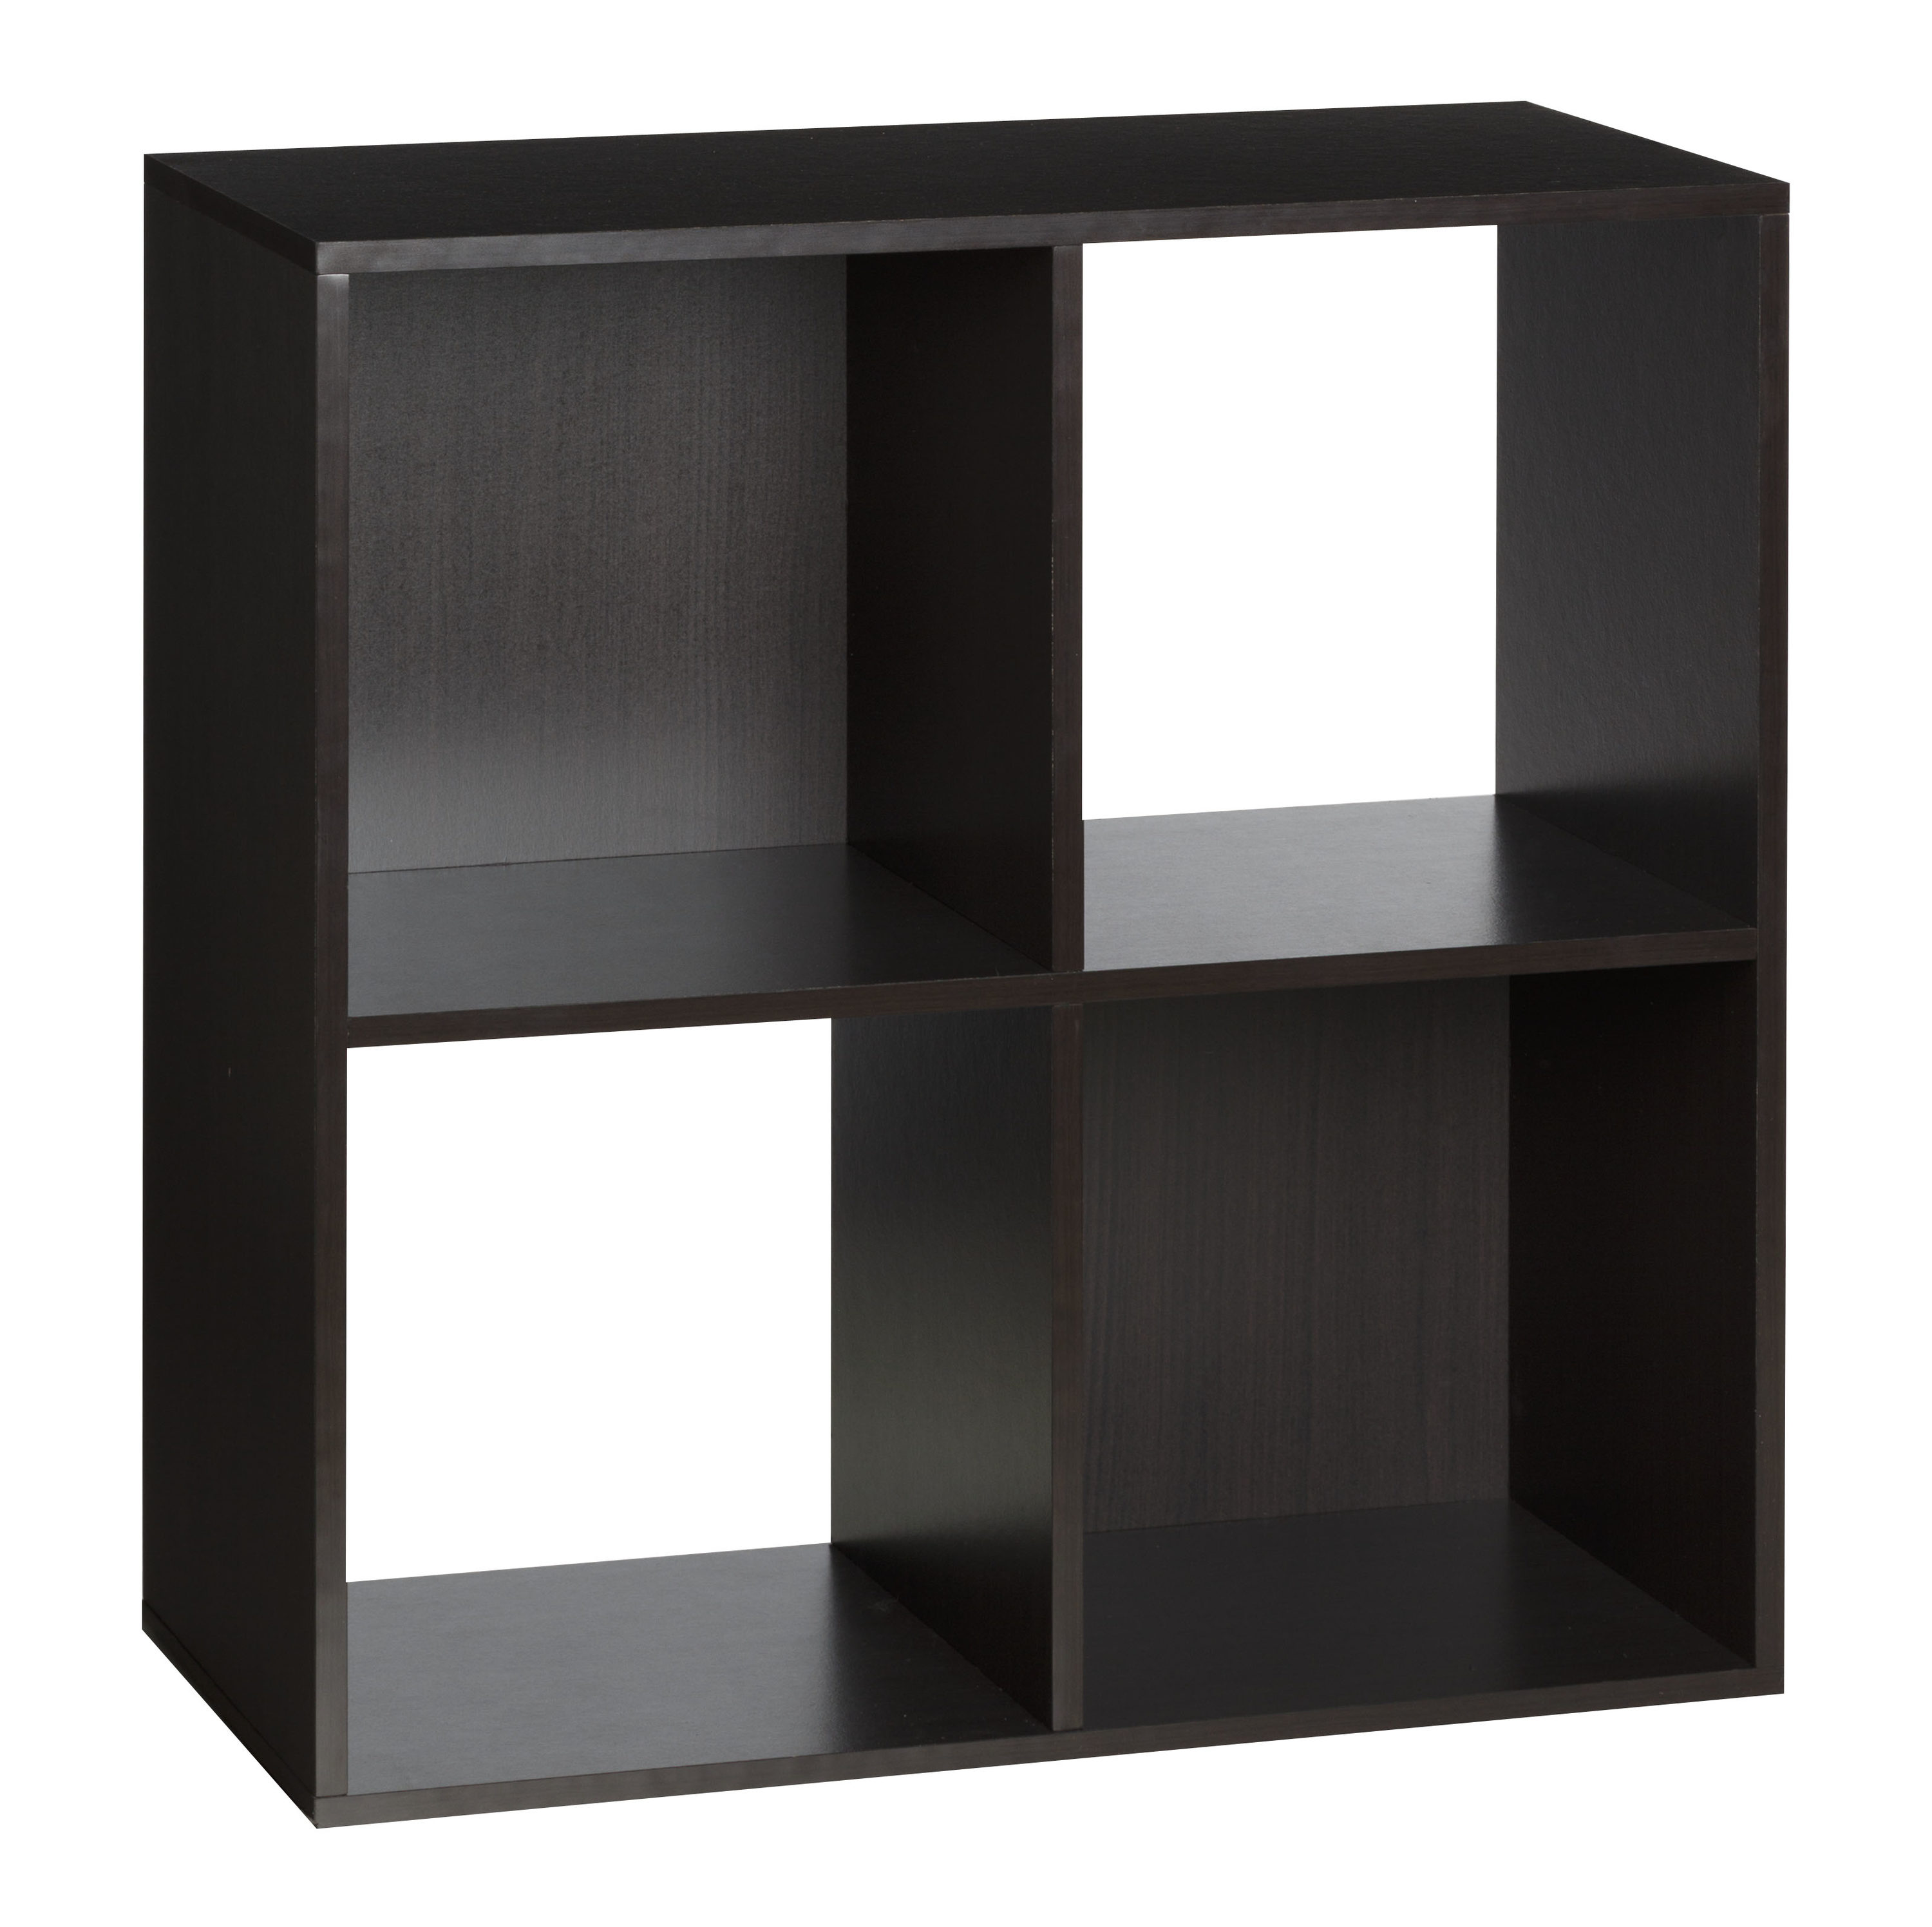 Espresso 12 Cube Bookcase Storage Organizer Wooden Office Shelving Bookshelf 